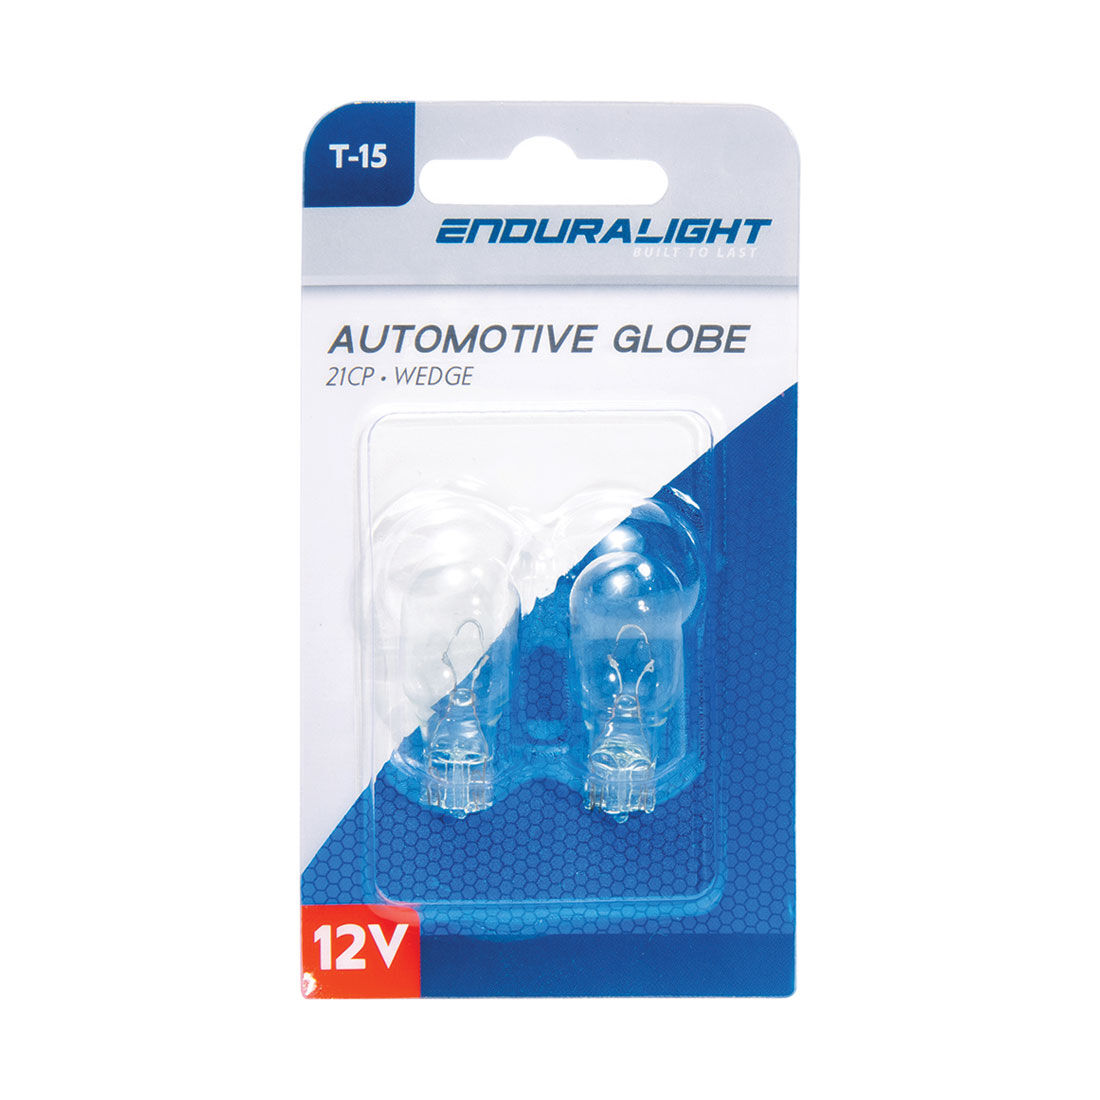 ENDURALIGHT Automotive Globes - Wedge 12V, 21CP, T-15, , scaau_hi-res